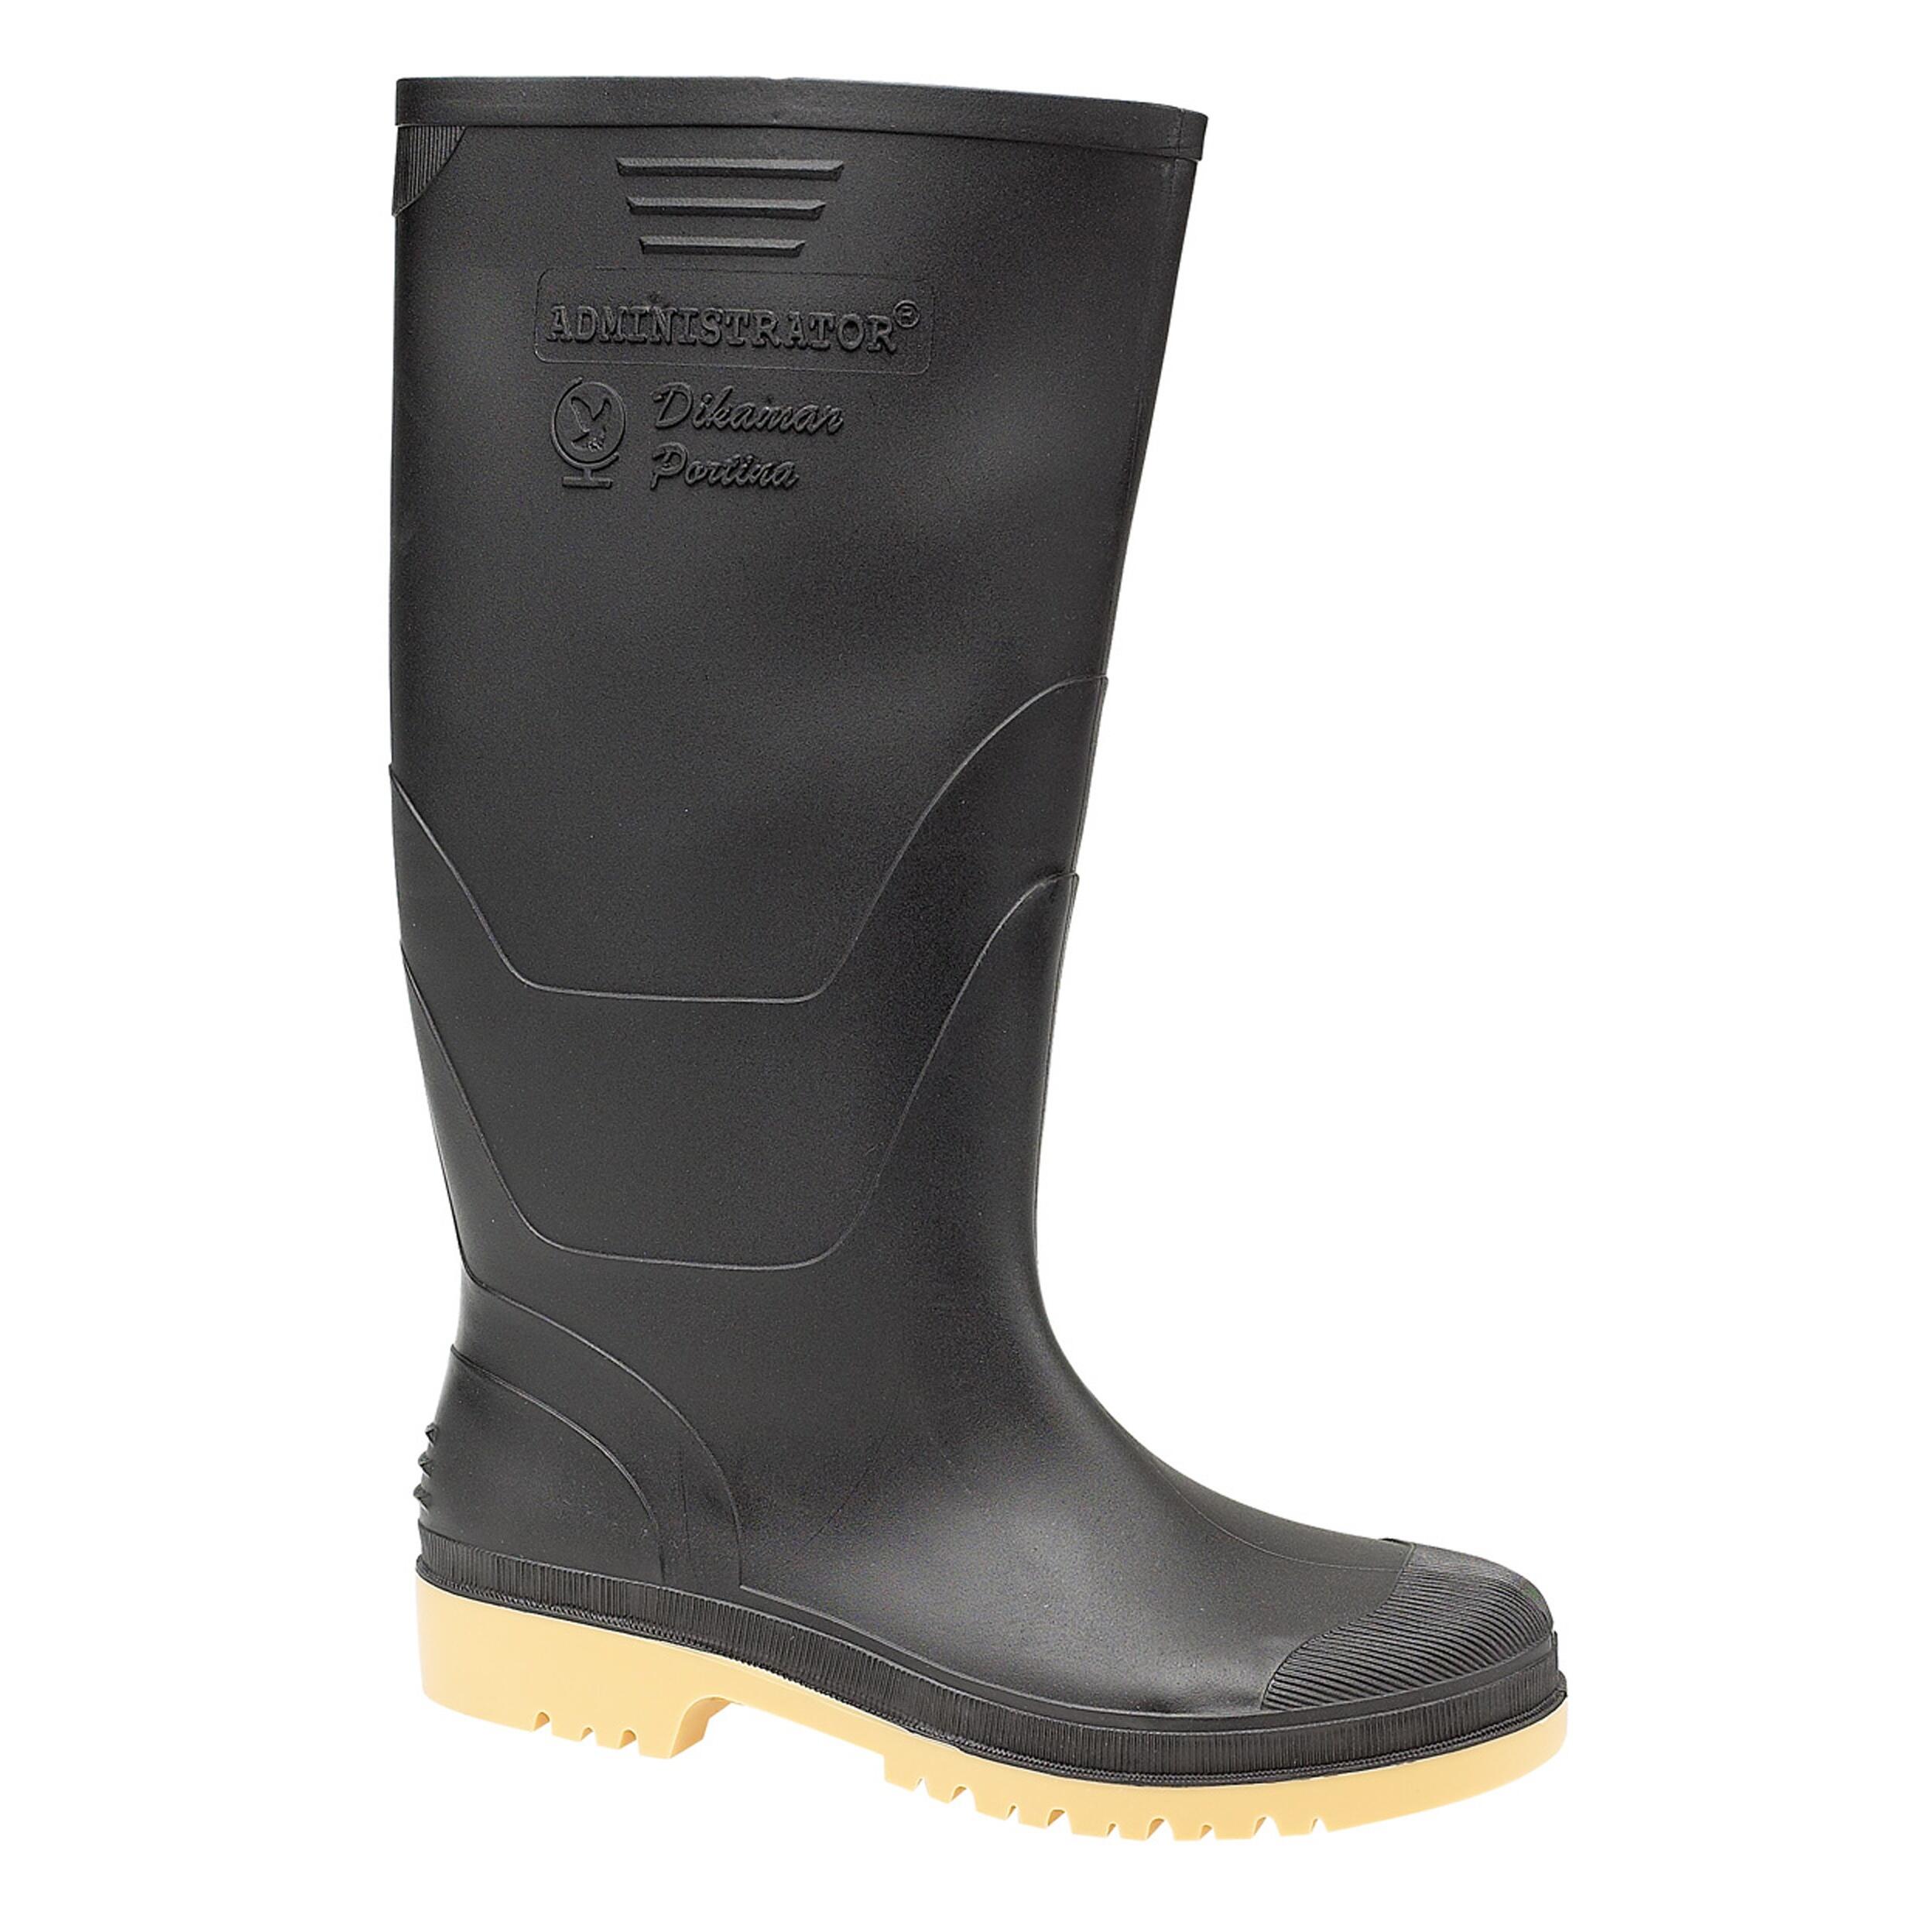 DIKAMAR Administrator Wellington / Mens Boots / Plain Rubber Wellingtons (Black)